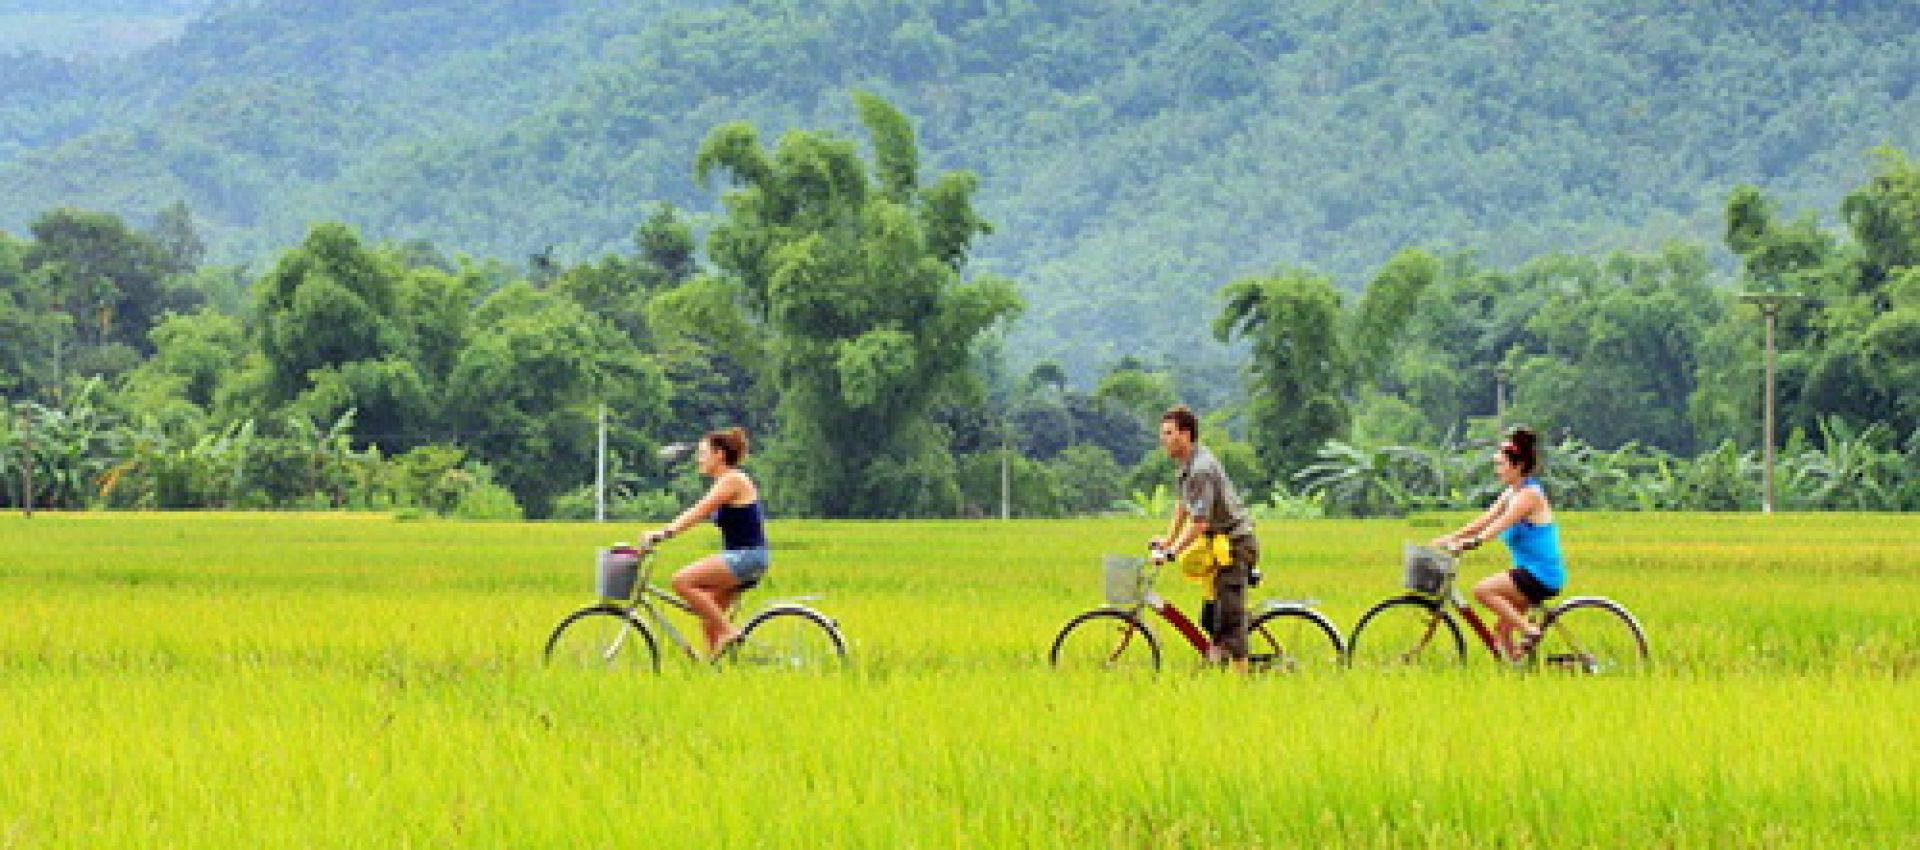 Vietnam Adventure Tour 3 Day Authentic Northwest To Mai Chau - Pu Luong 